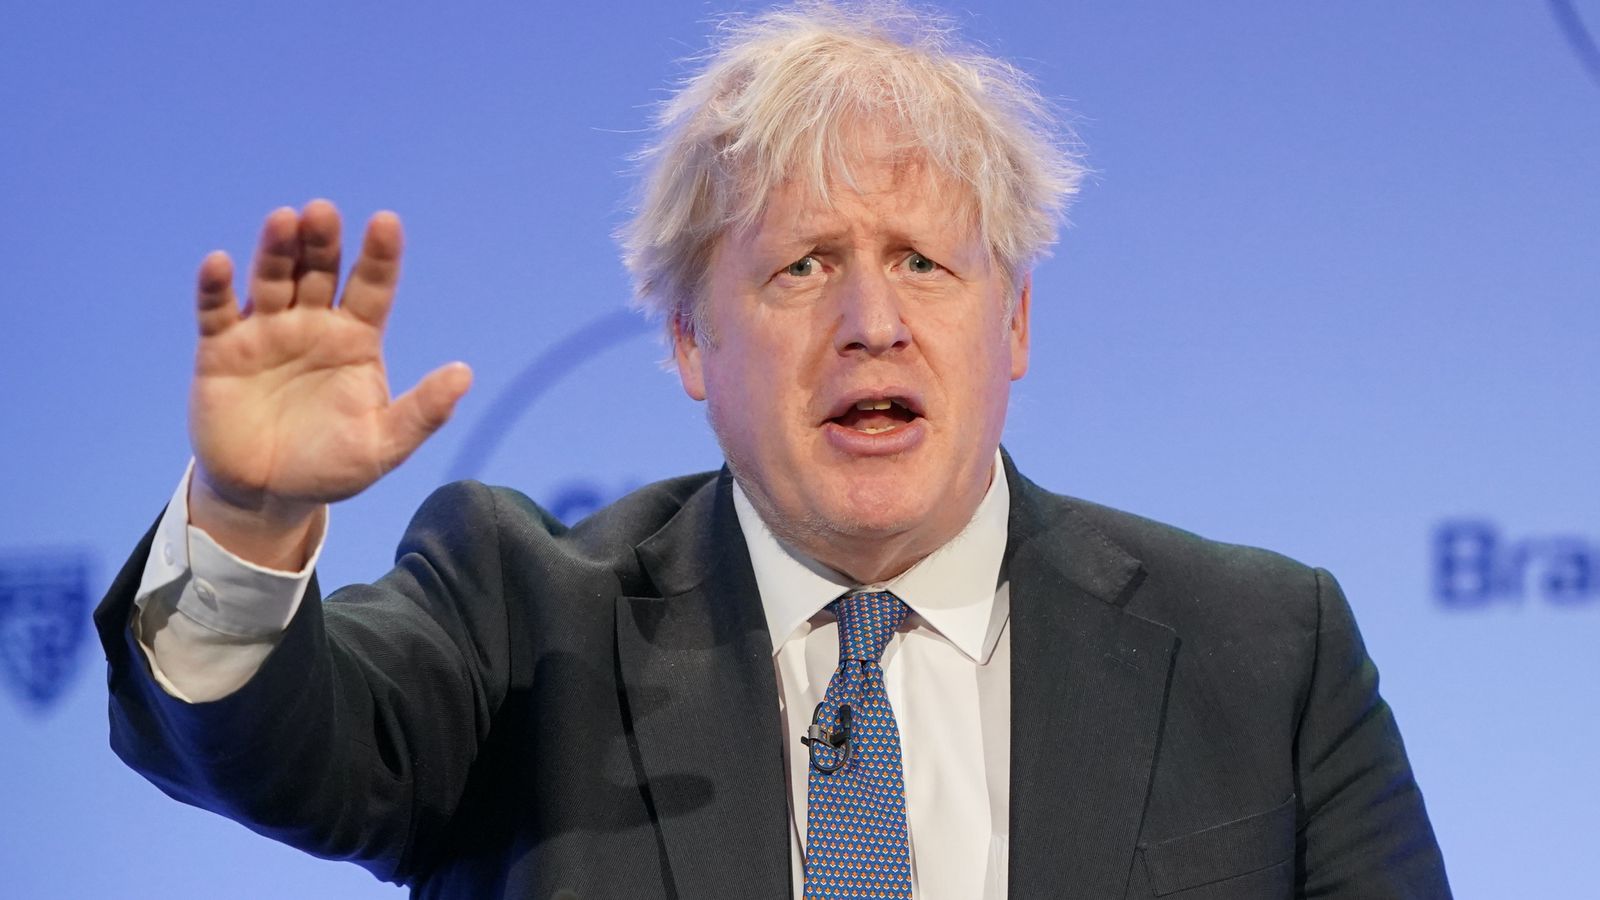 Boris Johnson warned he could lose public legal funding for COVID inquiry |  Politics News